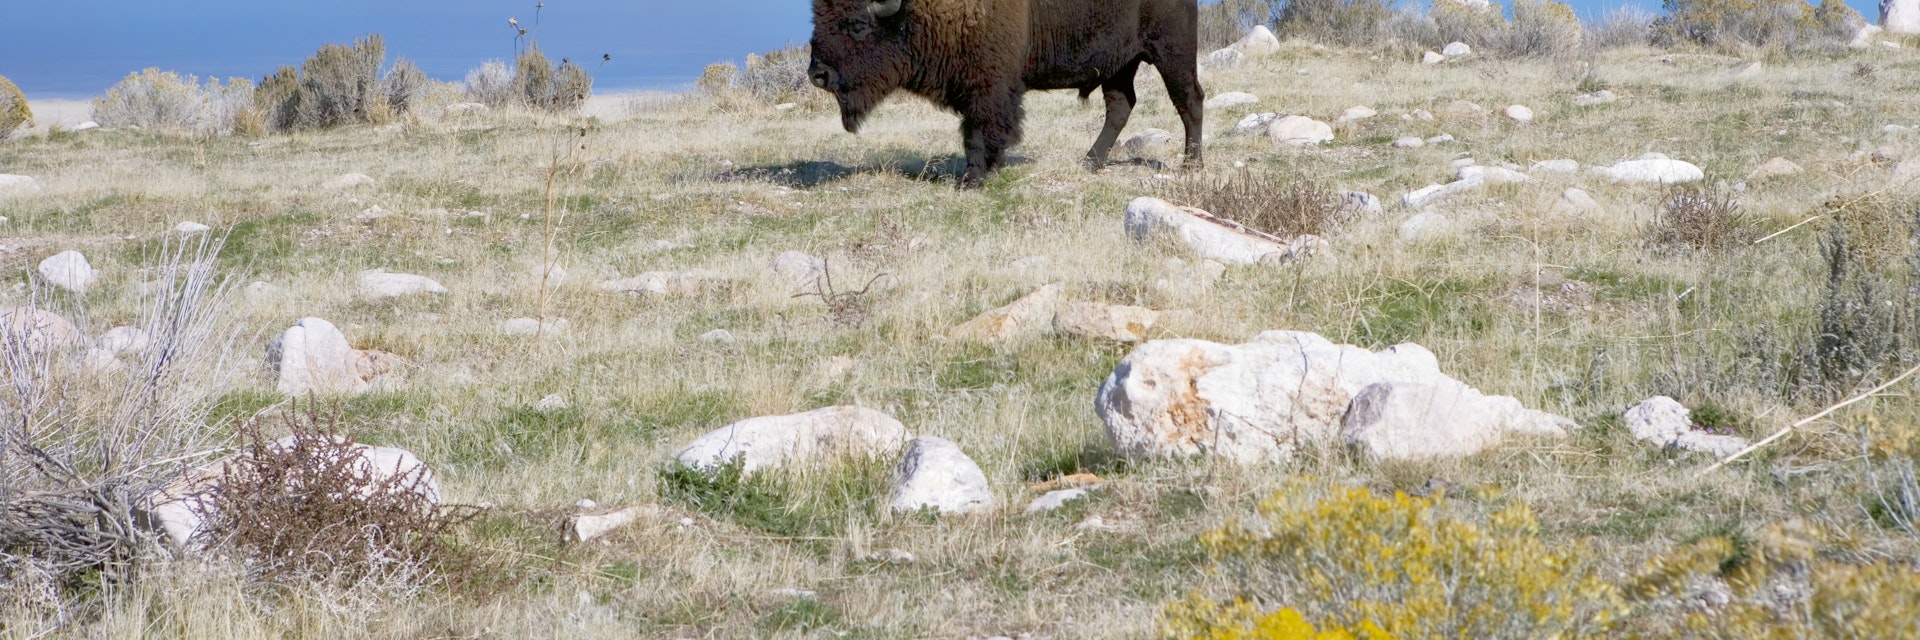 Buffalo in Antelope Island State Park.